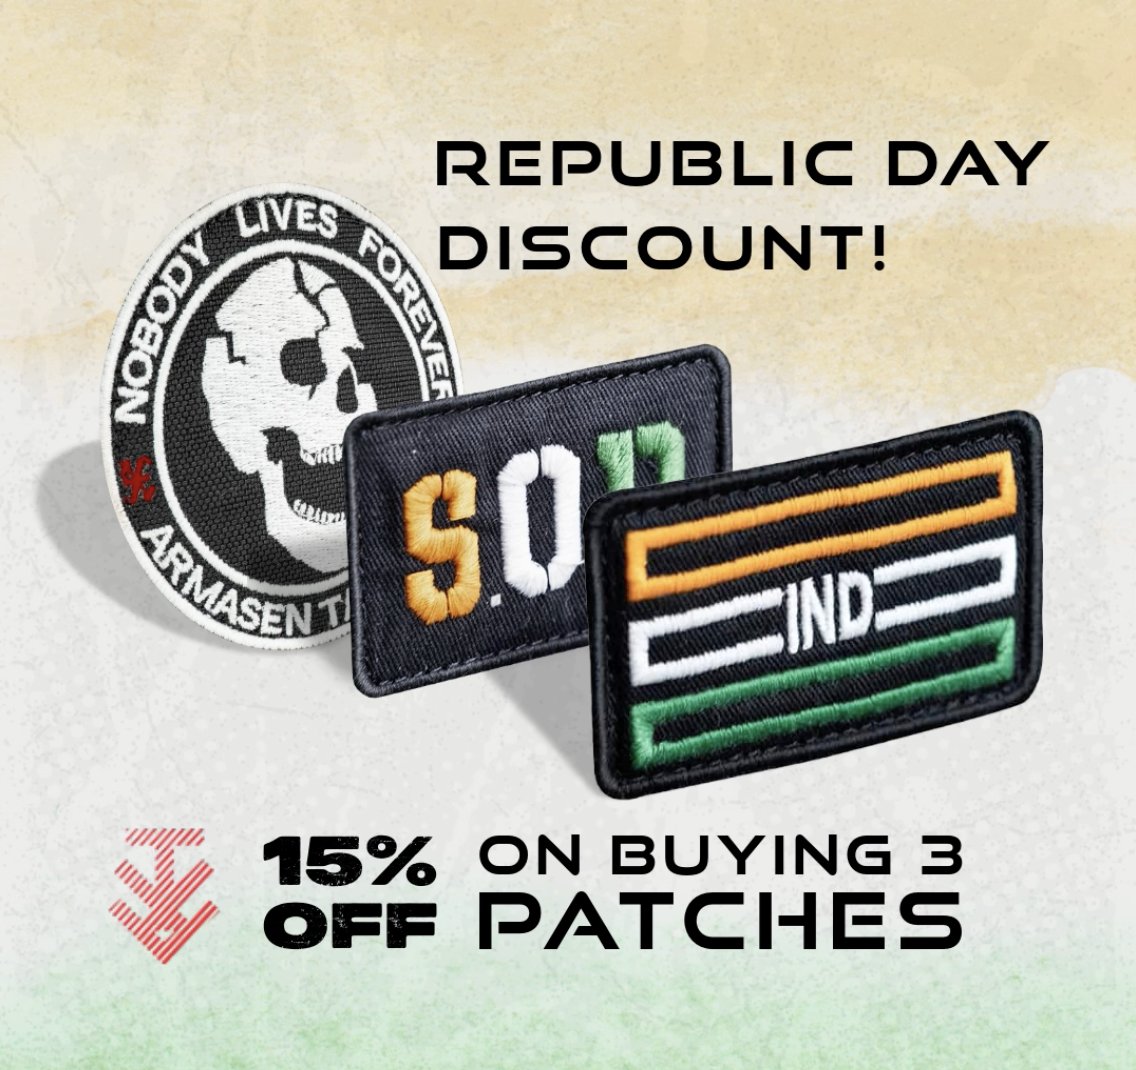 𝐂𝐞𝐥𝐞𝐛𝐫𝐚𝐭𝐞 𝐑𝐞𝐩𝐮𝐛𝐥𝐢𝐜 𝐃𝐚𝐲 𝐰𝐢𝐭𝐡 𝐨𝐮𝐫 𝐒𝐩𝐞𝐜𝐢𝐚𝐥 𝐂𝐨𝐦𝐛𝐨 𝐎𝐟𝐟𝐞𝐫! 
Get 𝟏𝟓% 𝐨𝐟𝐟 on our 𝗣𝗮𝘁𝗰𝗵 𝗖𝗼𝗺𝗯𝗼 of three Patches! 

SHOP NOW! 
↳armasentactical.com/shop/accessori…

#RepublicDay #RepublicDay2024 #RepublicDaySale